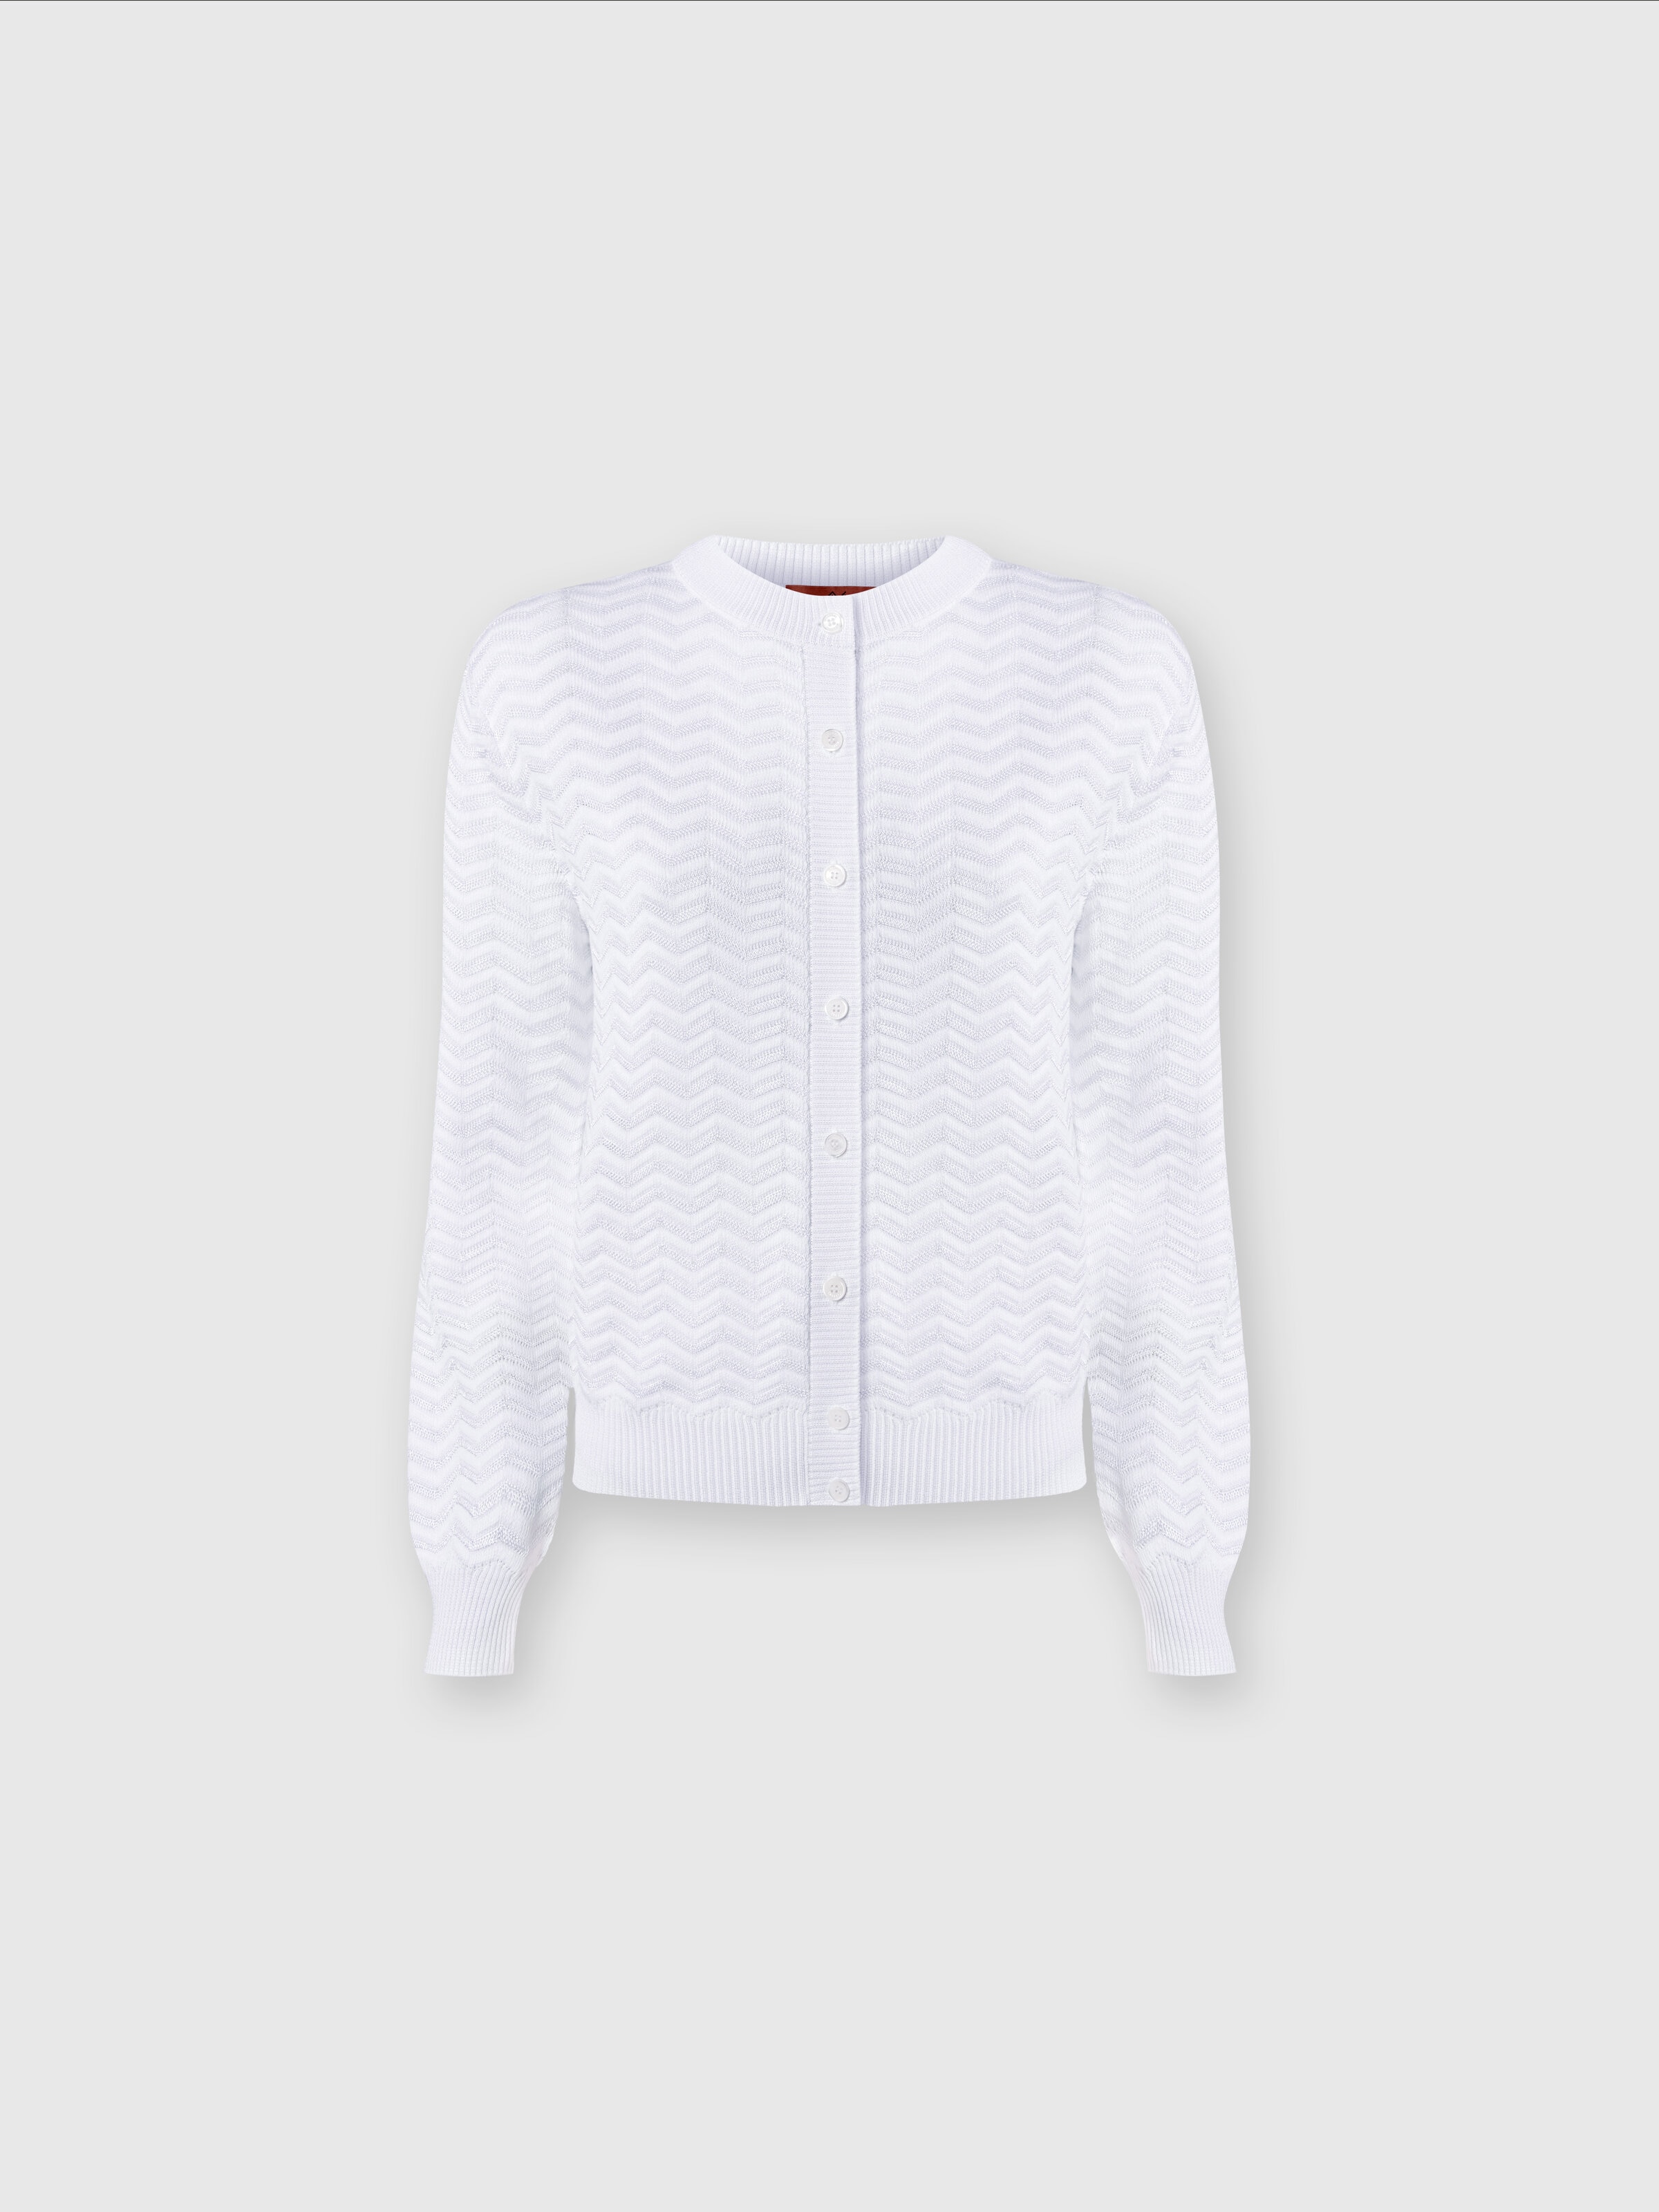 Cardigan in chevron cotton and viscose knit, White  - 0